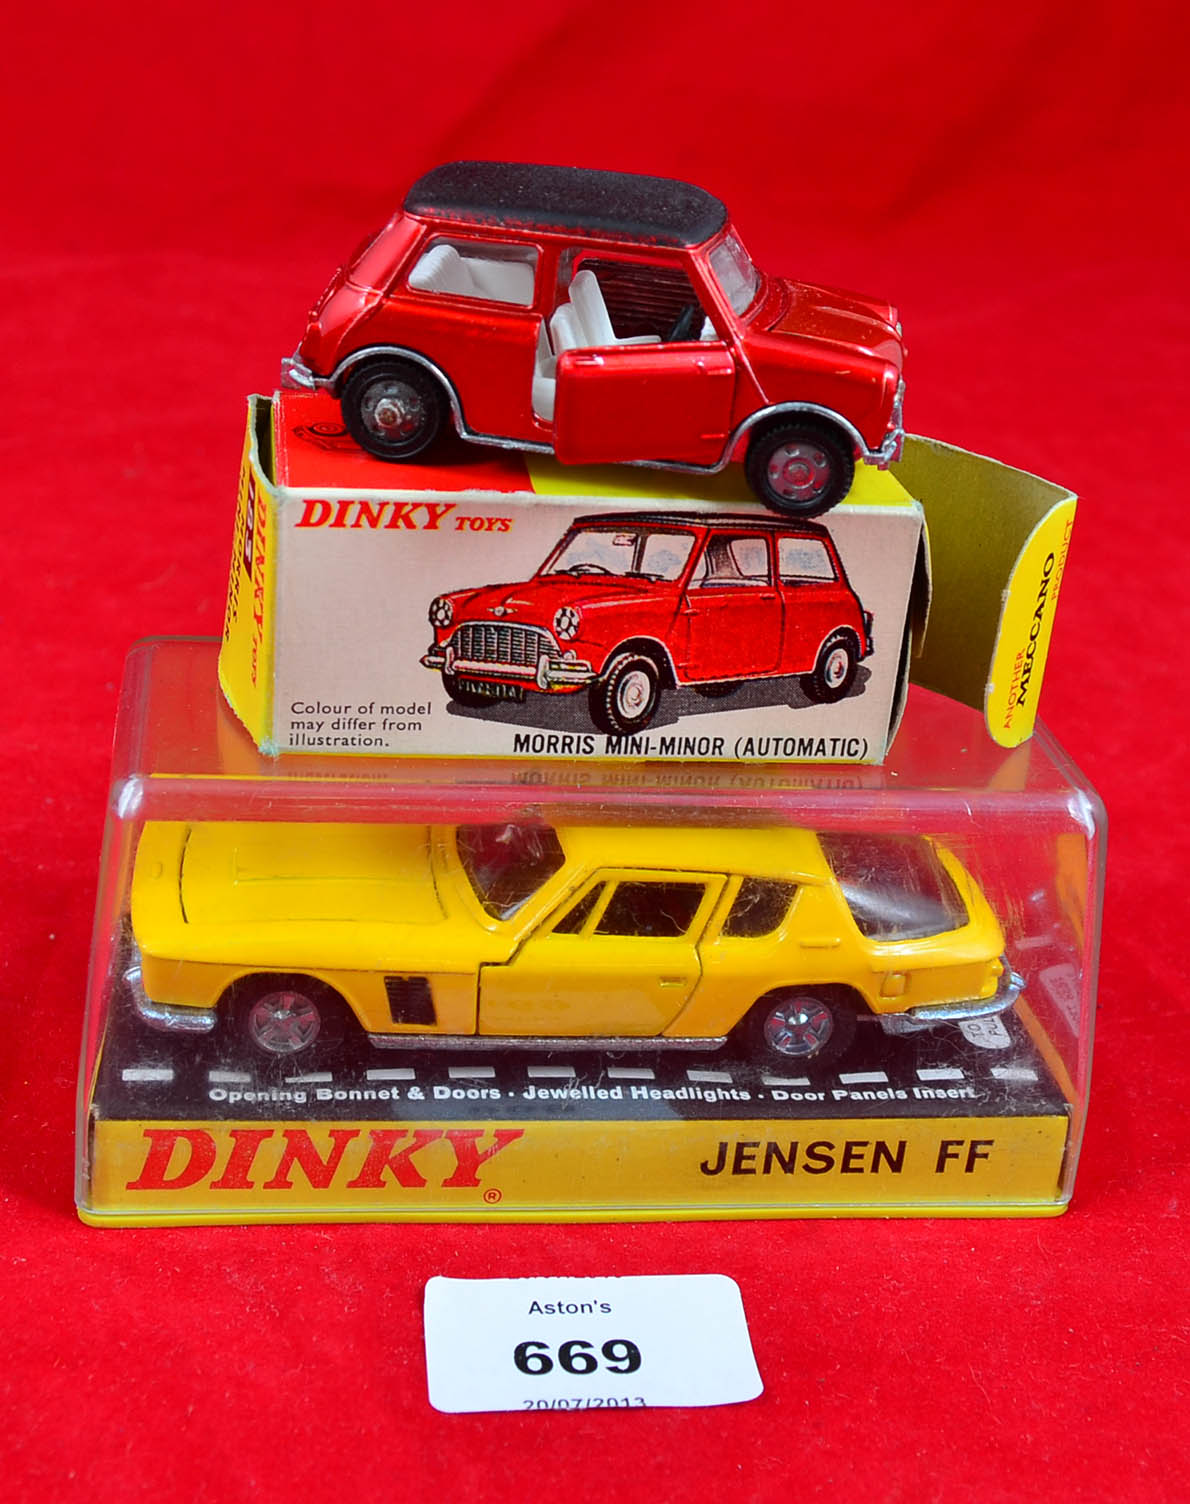 Two Dinky Toys cars: 188 Jensen FF (VG in VG box); 183 Morris Mini-Minor (VG in G/VG box).